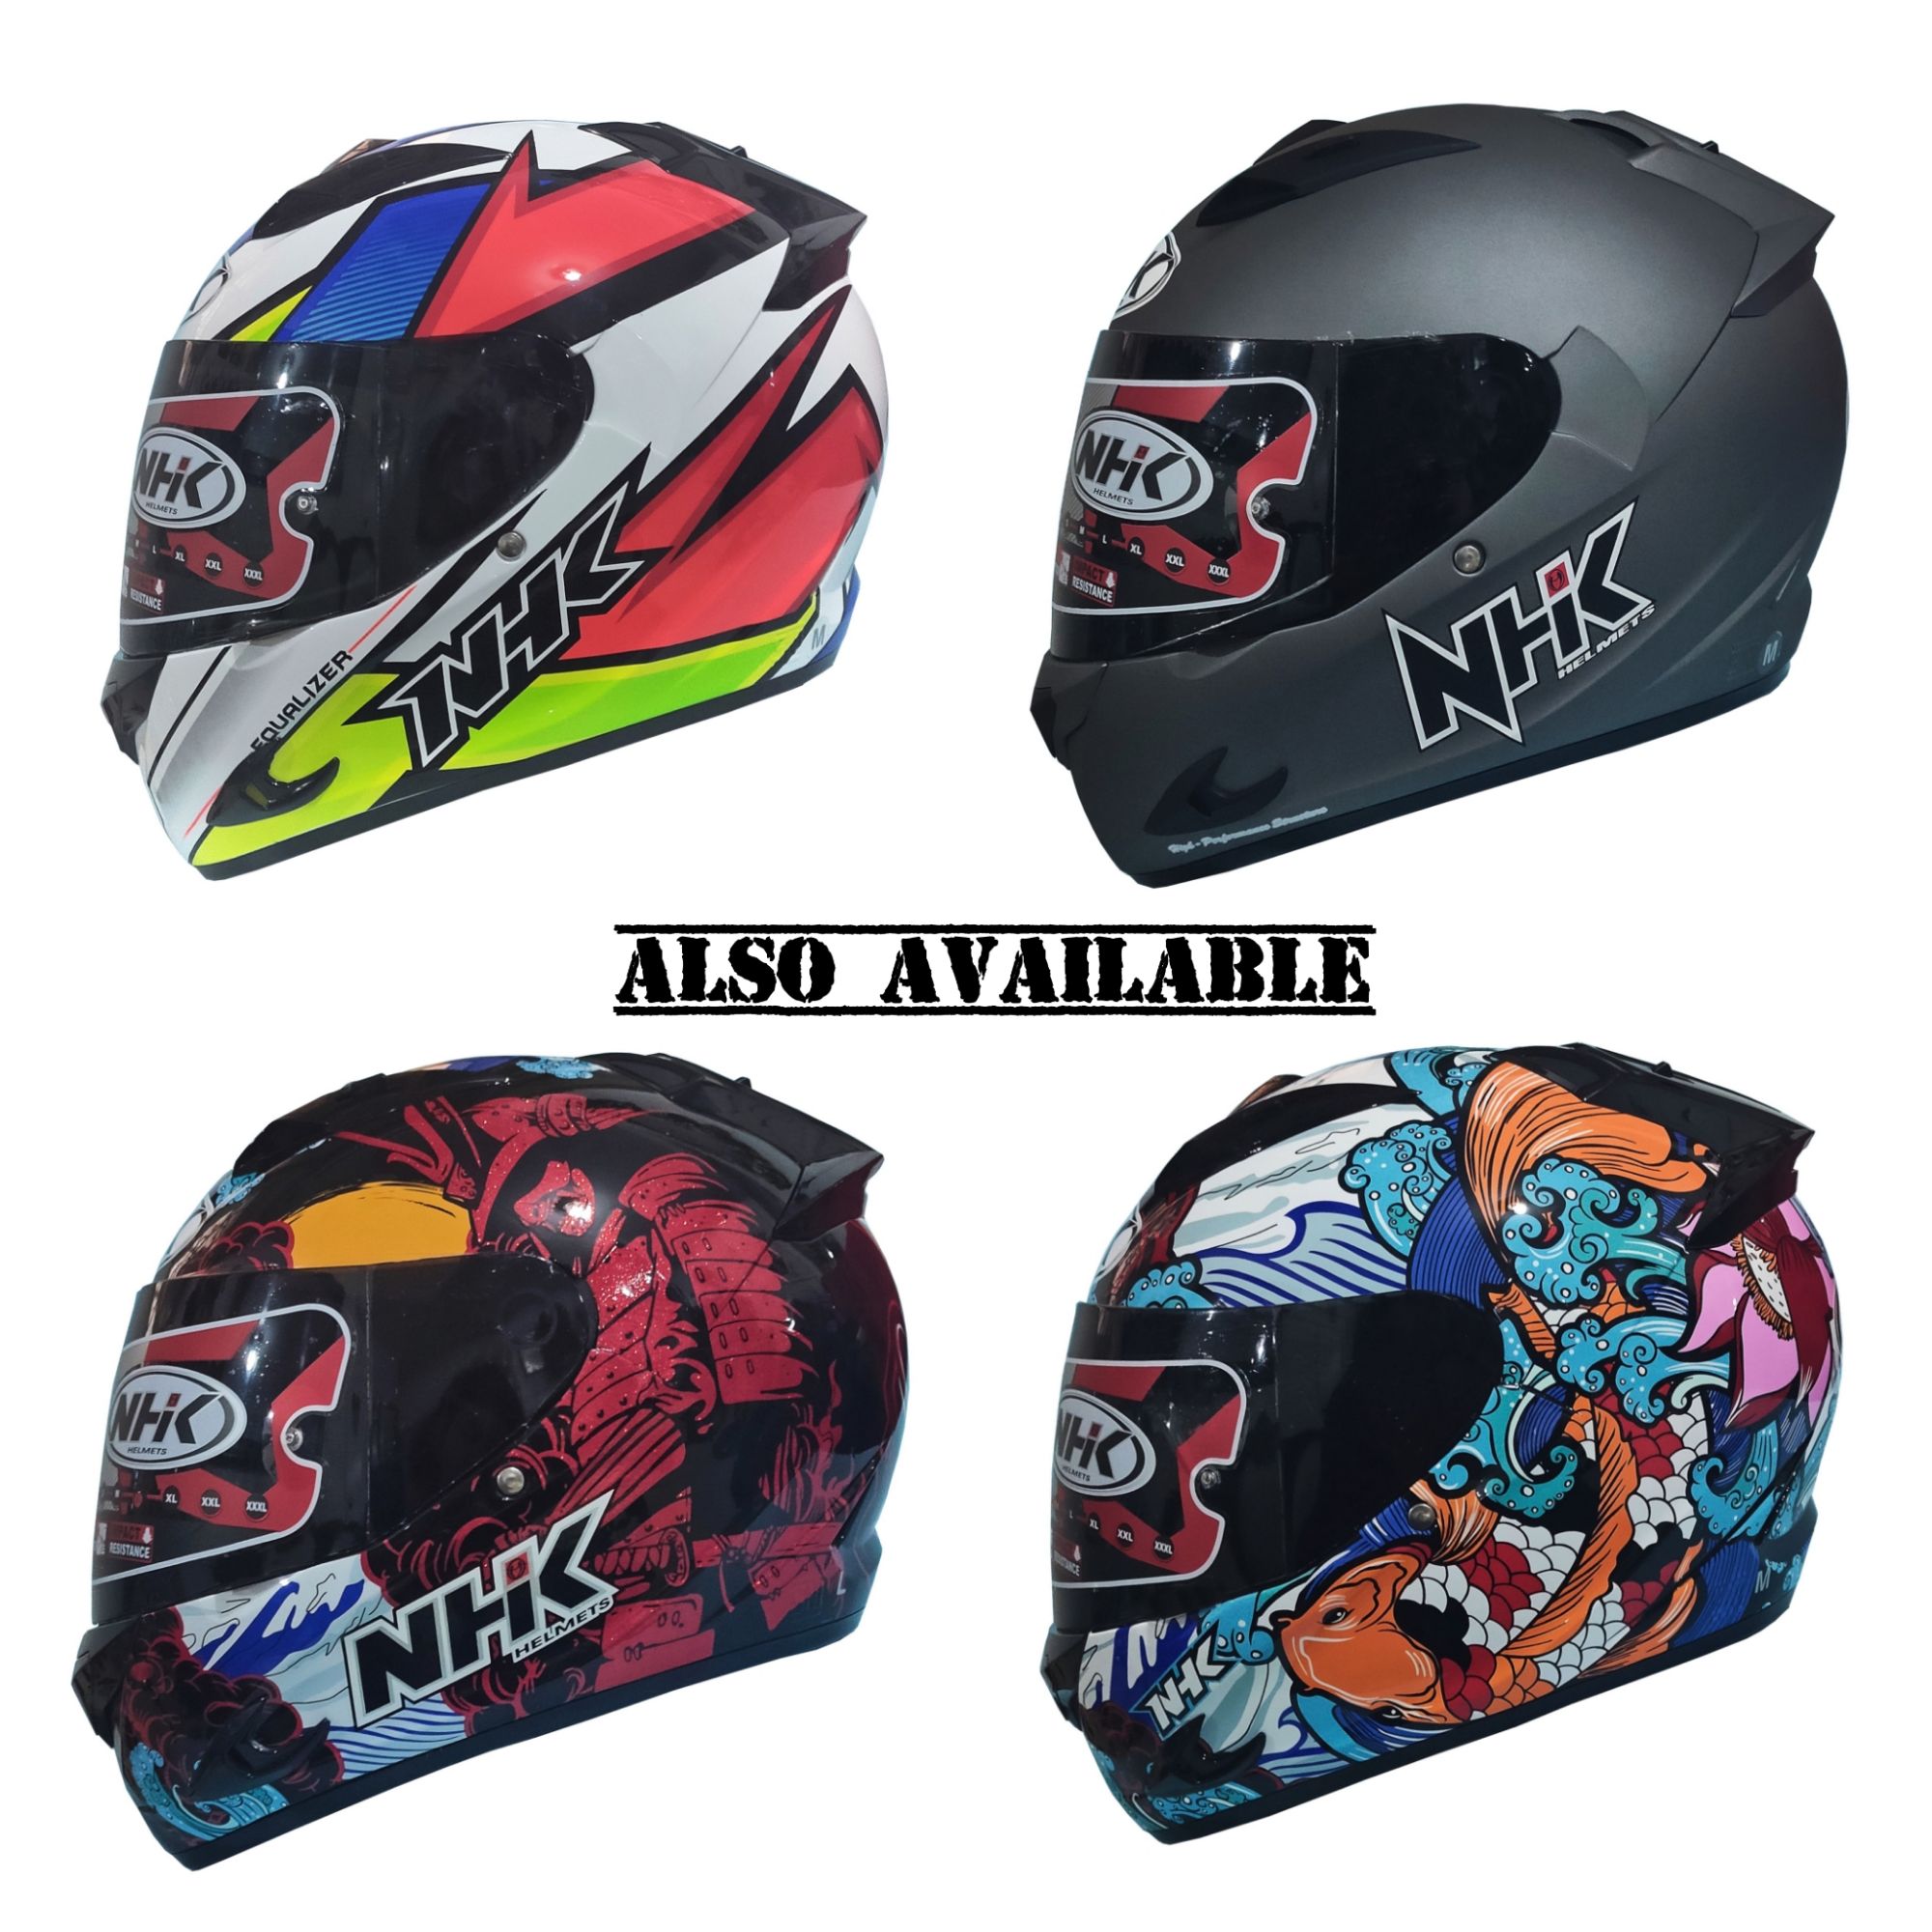 Nhk Race Pro Samurai Black Metallic Glossy Full Face Helmet Lazada Ph